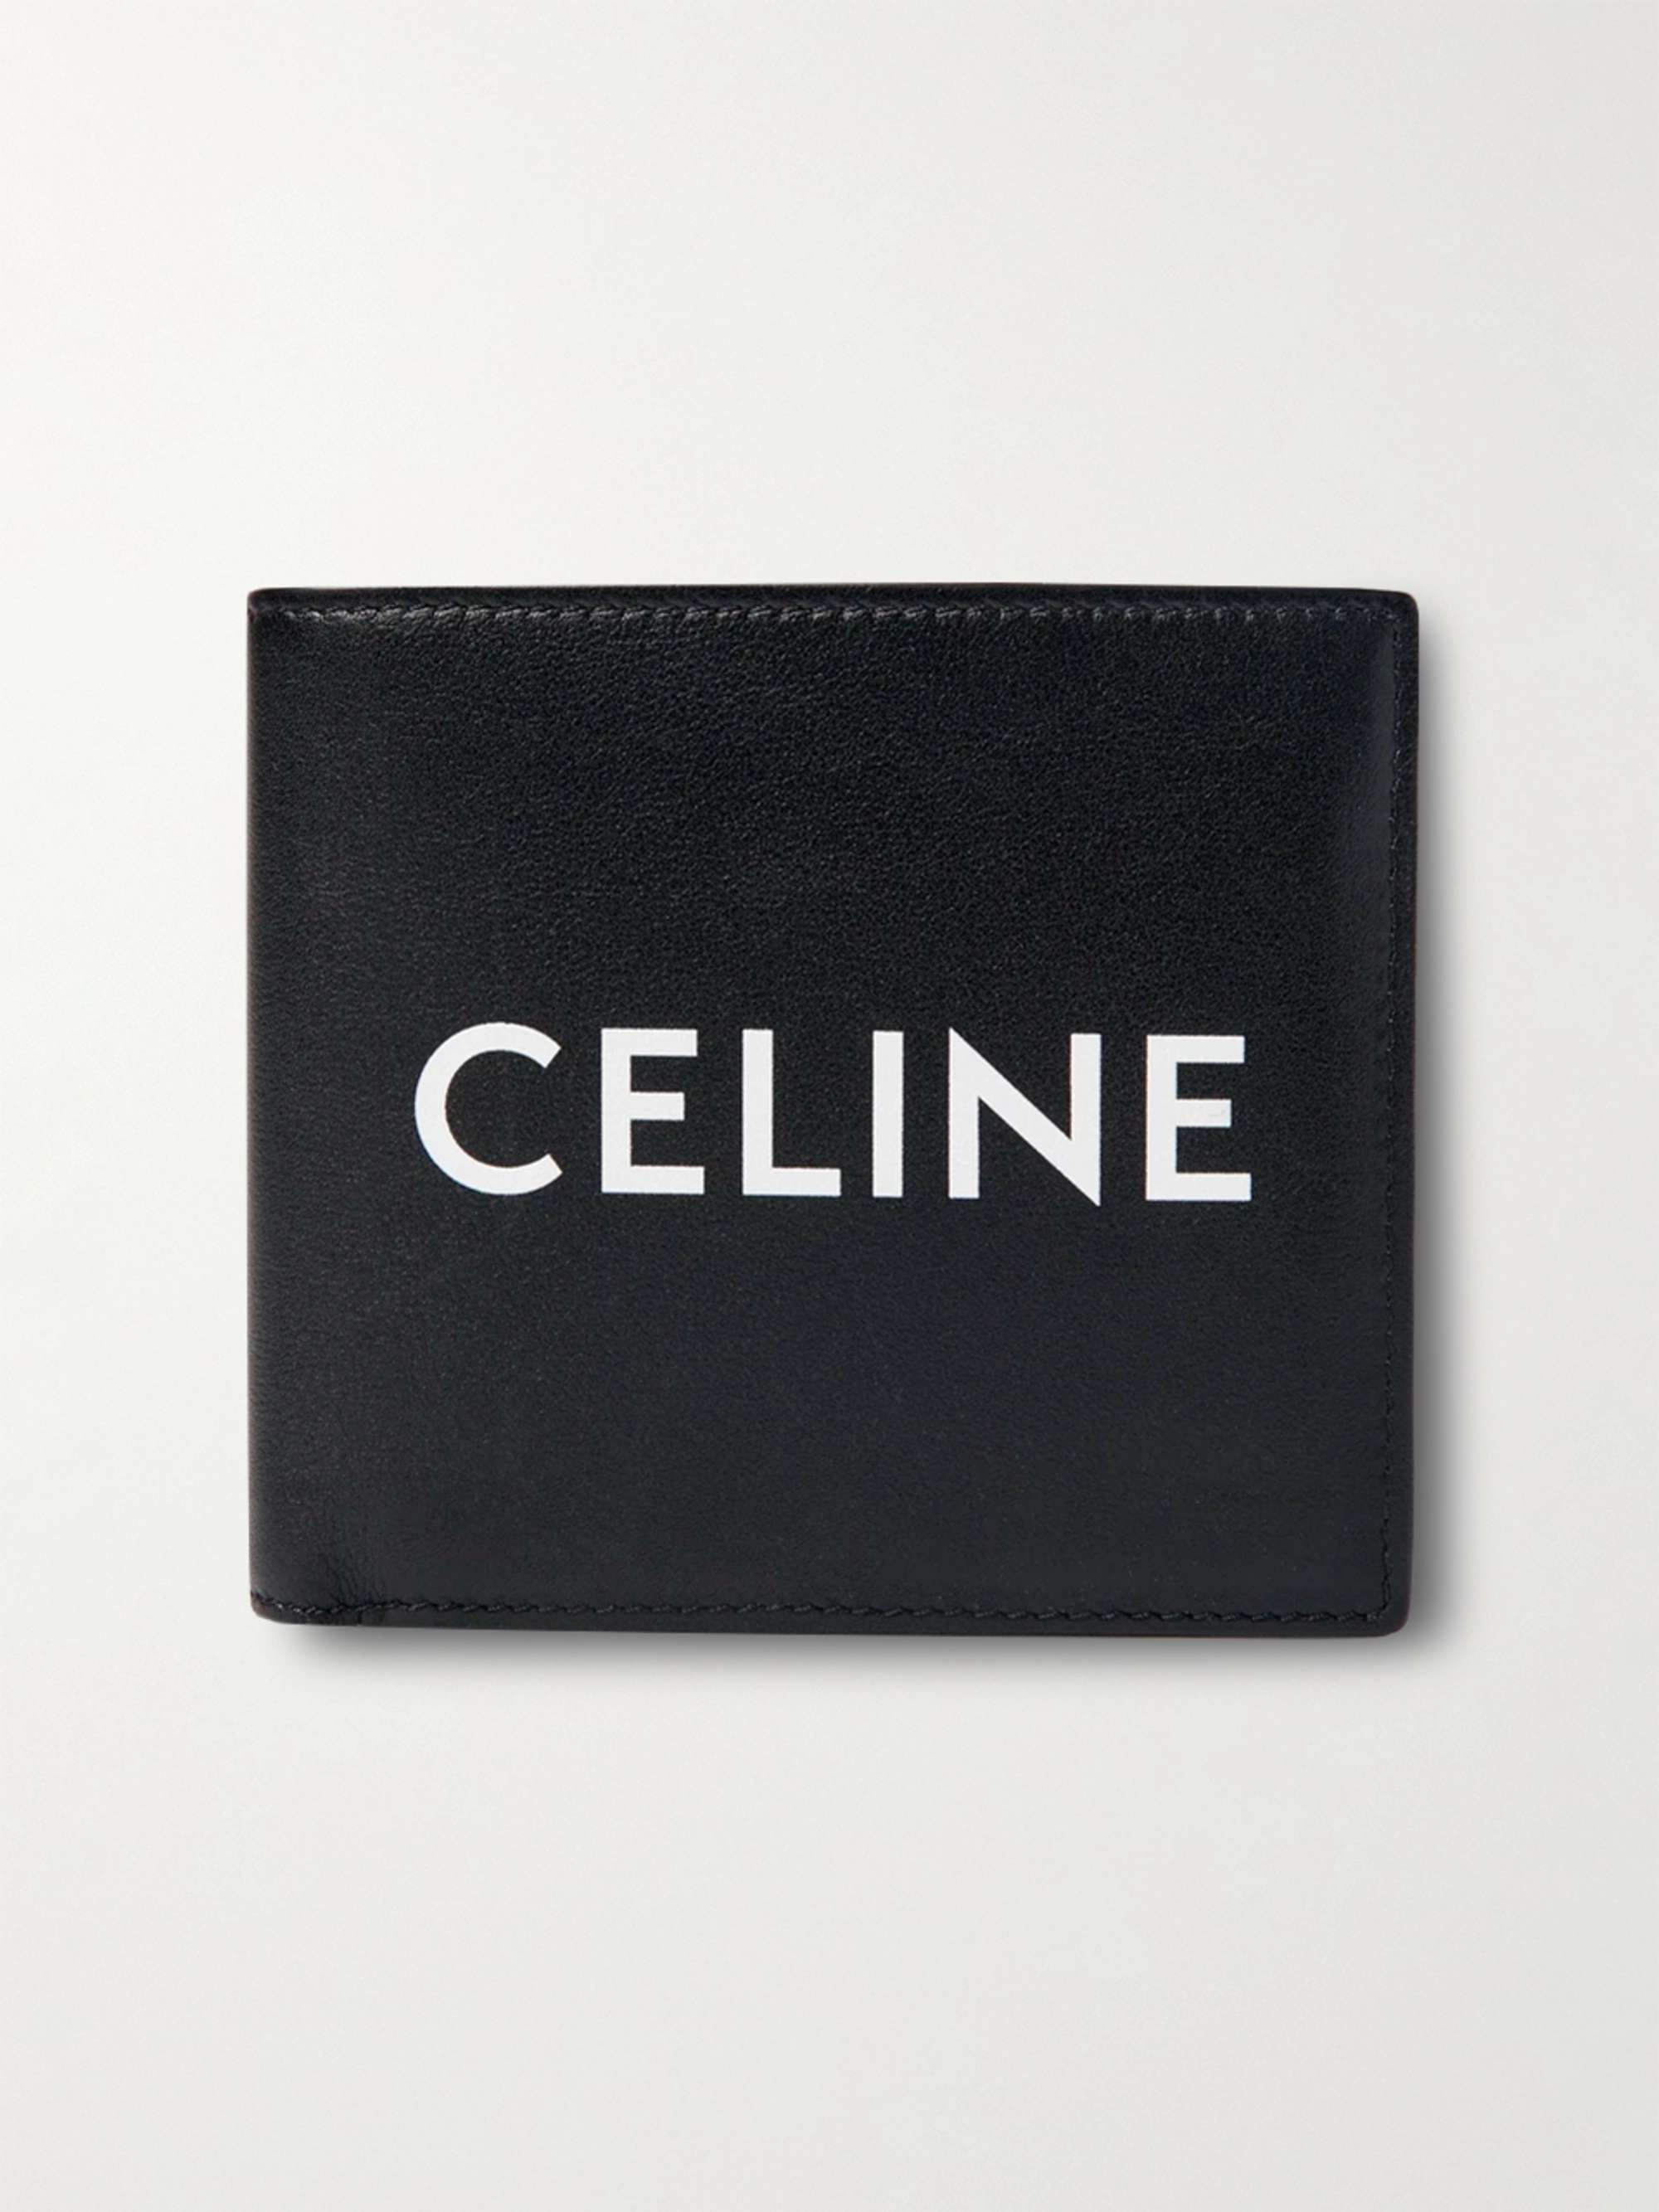 CELINE HOMME Logo-Print Leather Billfold Wallet